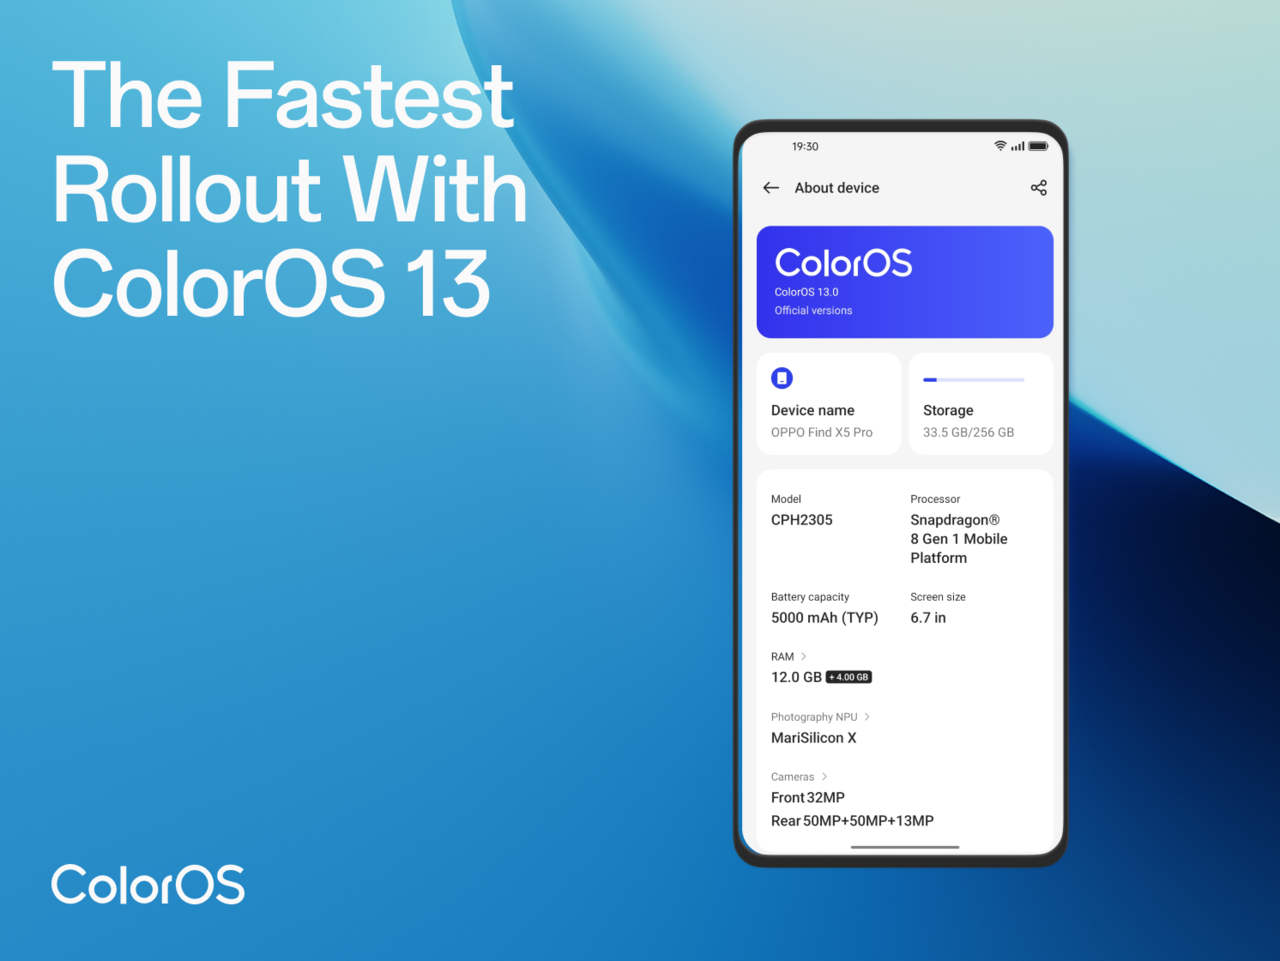 ColorOS 13 upgrade | ColorOS 13 | OPPO อัปเดต ColorOS 13 ในสถิติเร็วที่สุด พร้อมประกาศประกันอัปซอฟต์แวร์ให้ยาว 5 ปี!